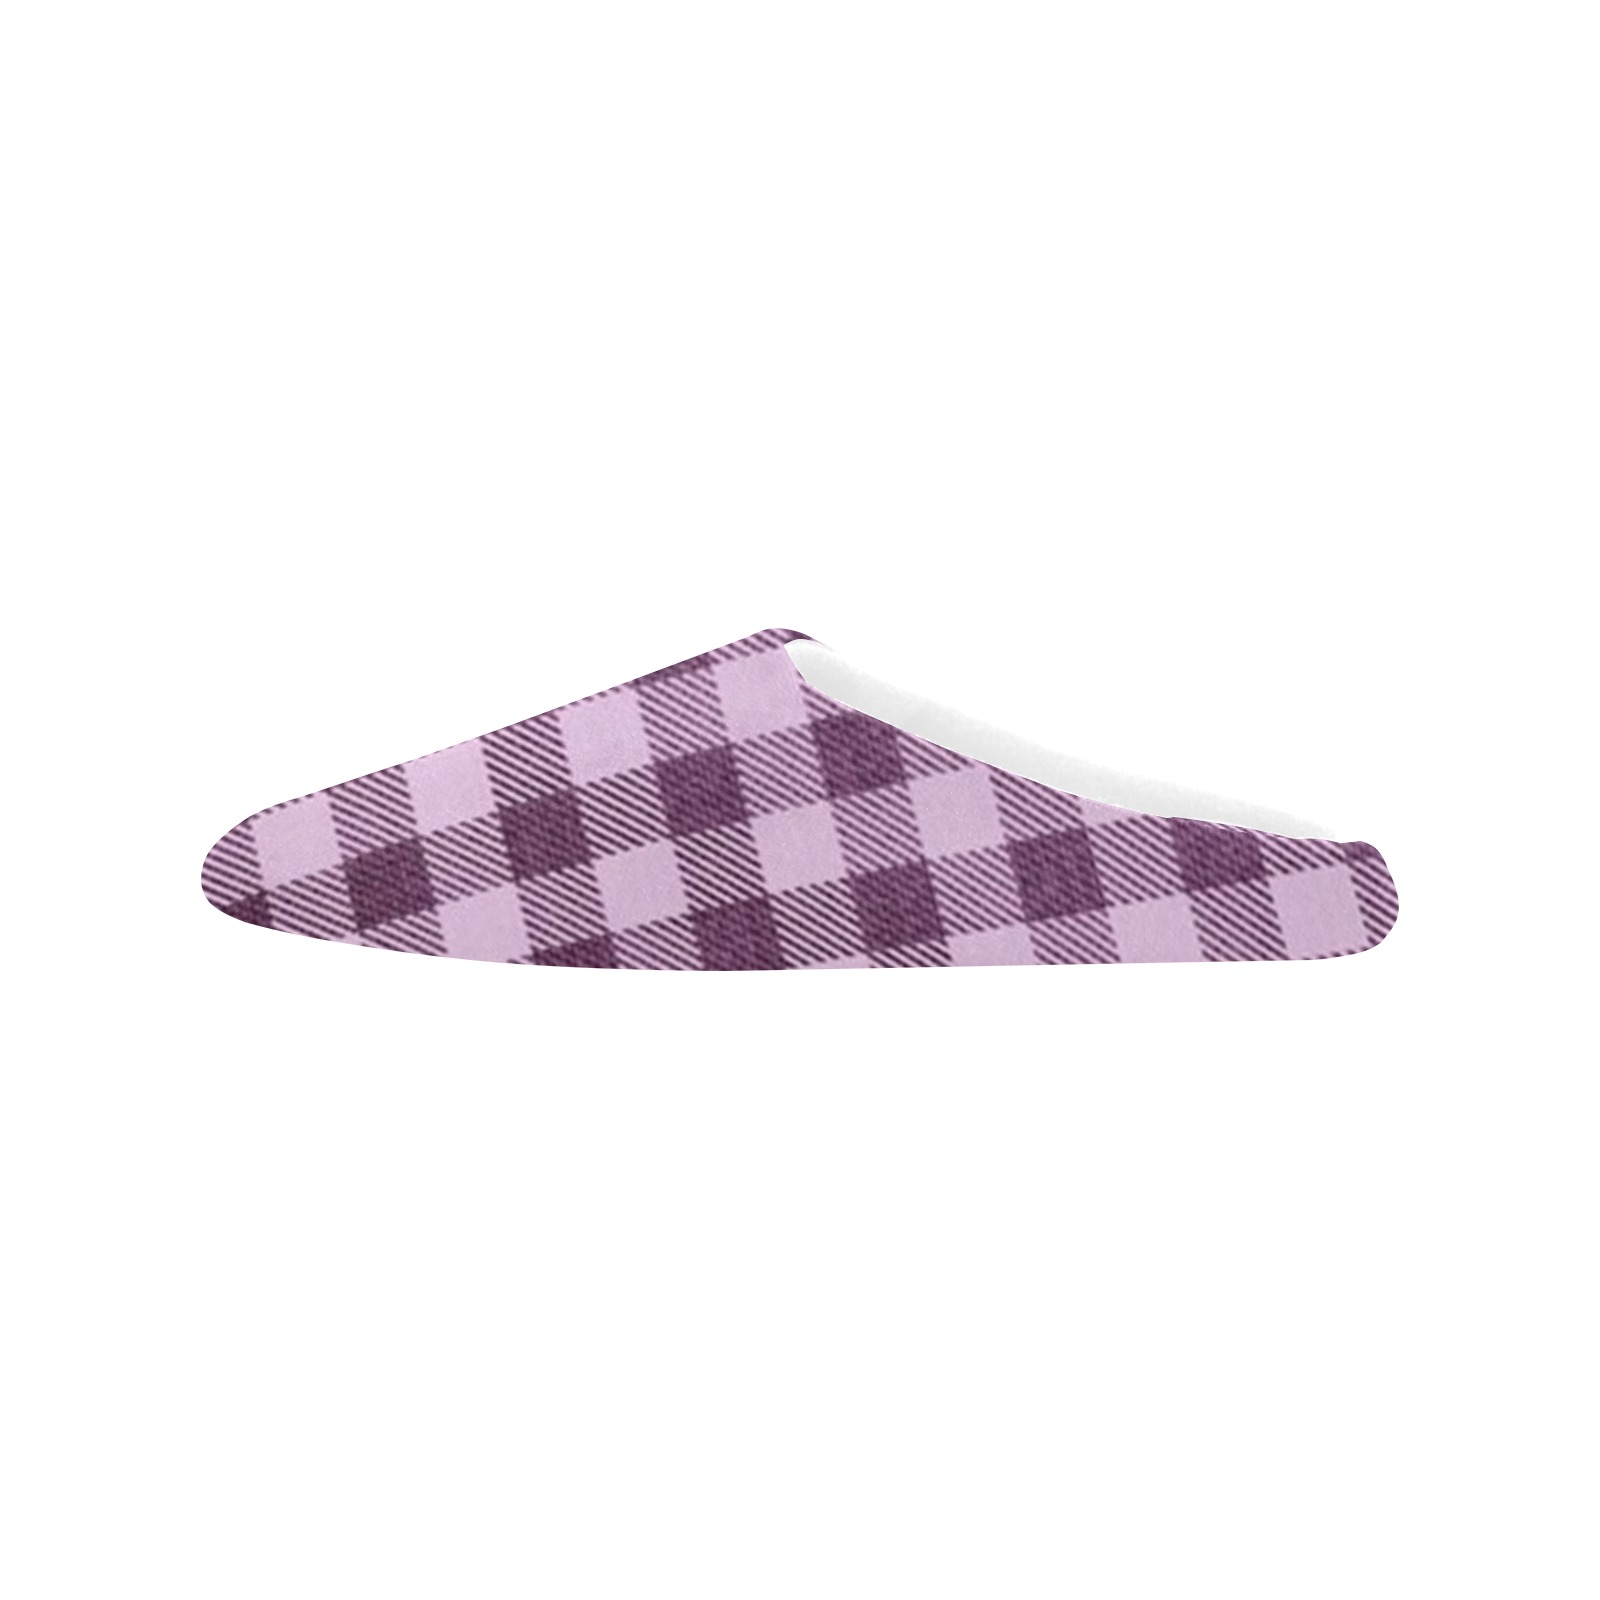 Pastel Rose Plaid Women's Non-Slip Cotton Slippers (Model 0602)